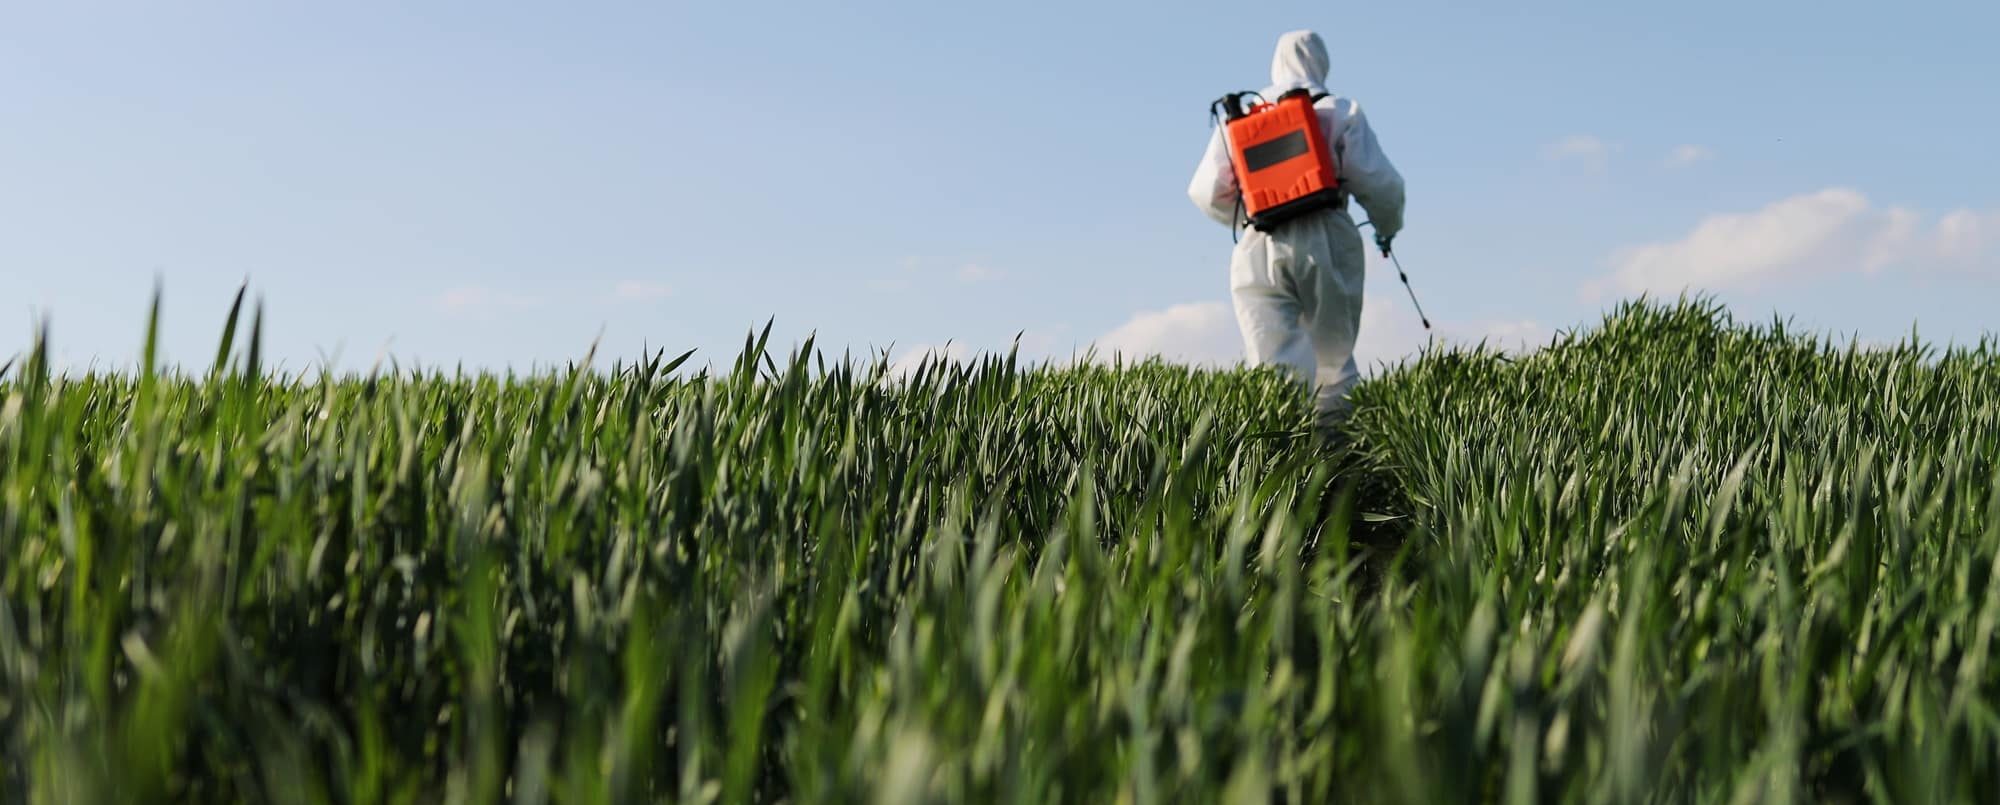 Veseris farmer spraying pesticides in the field